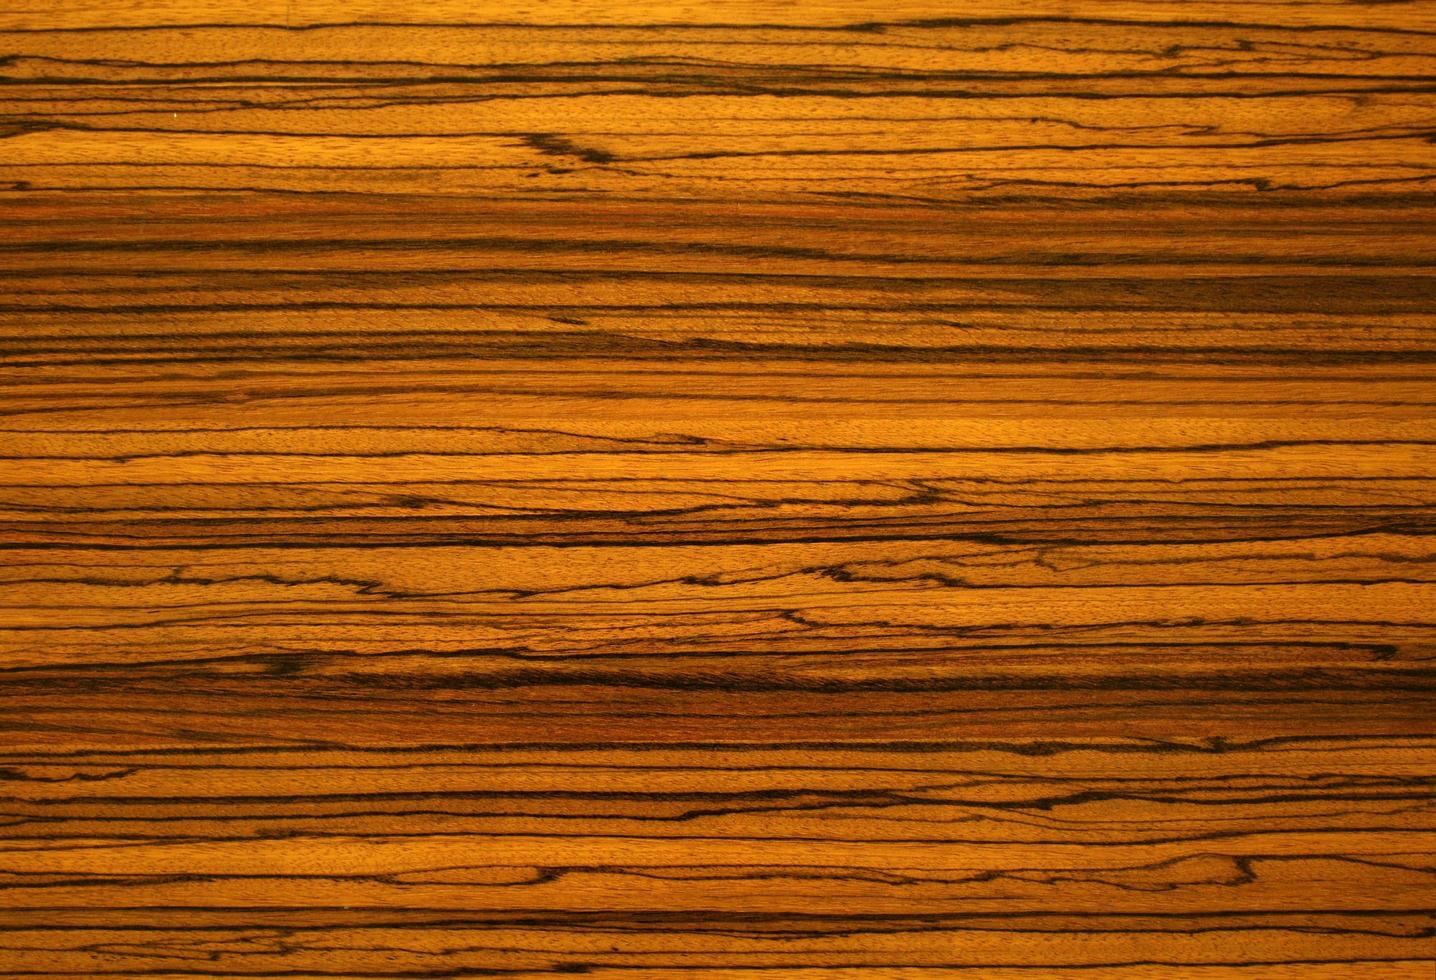 Rough wood texture photo